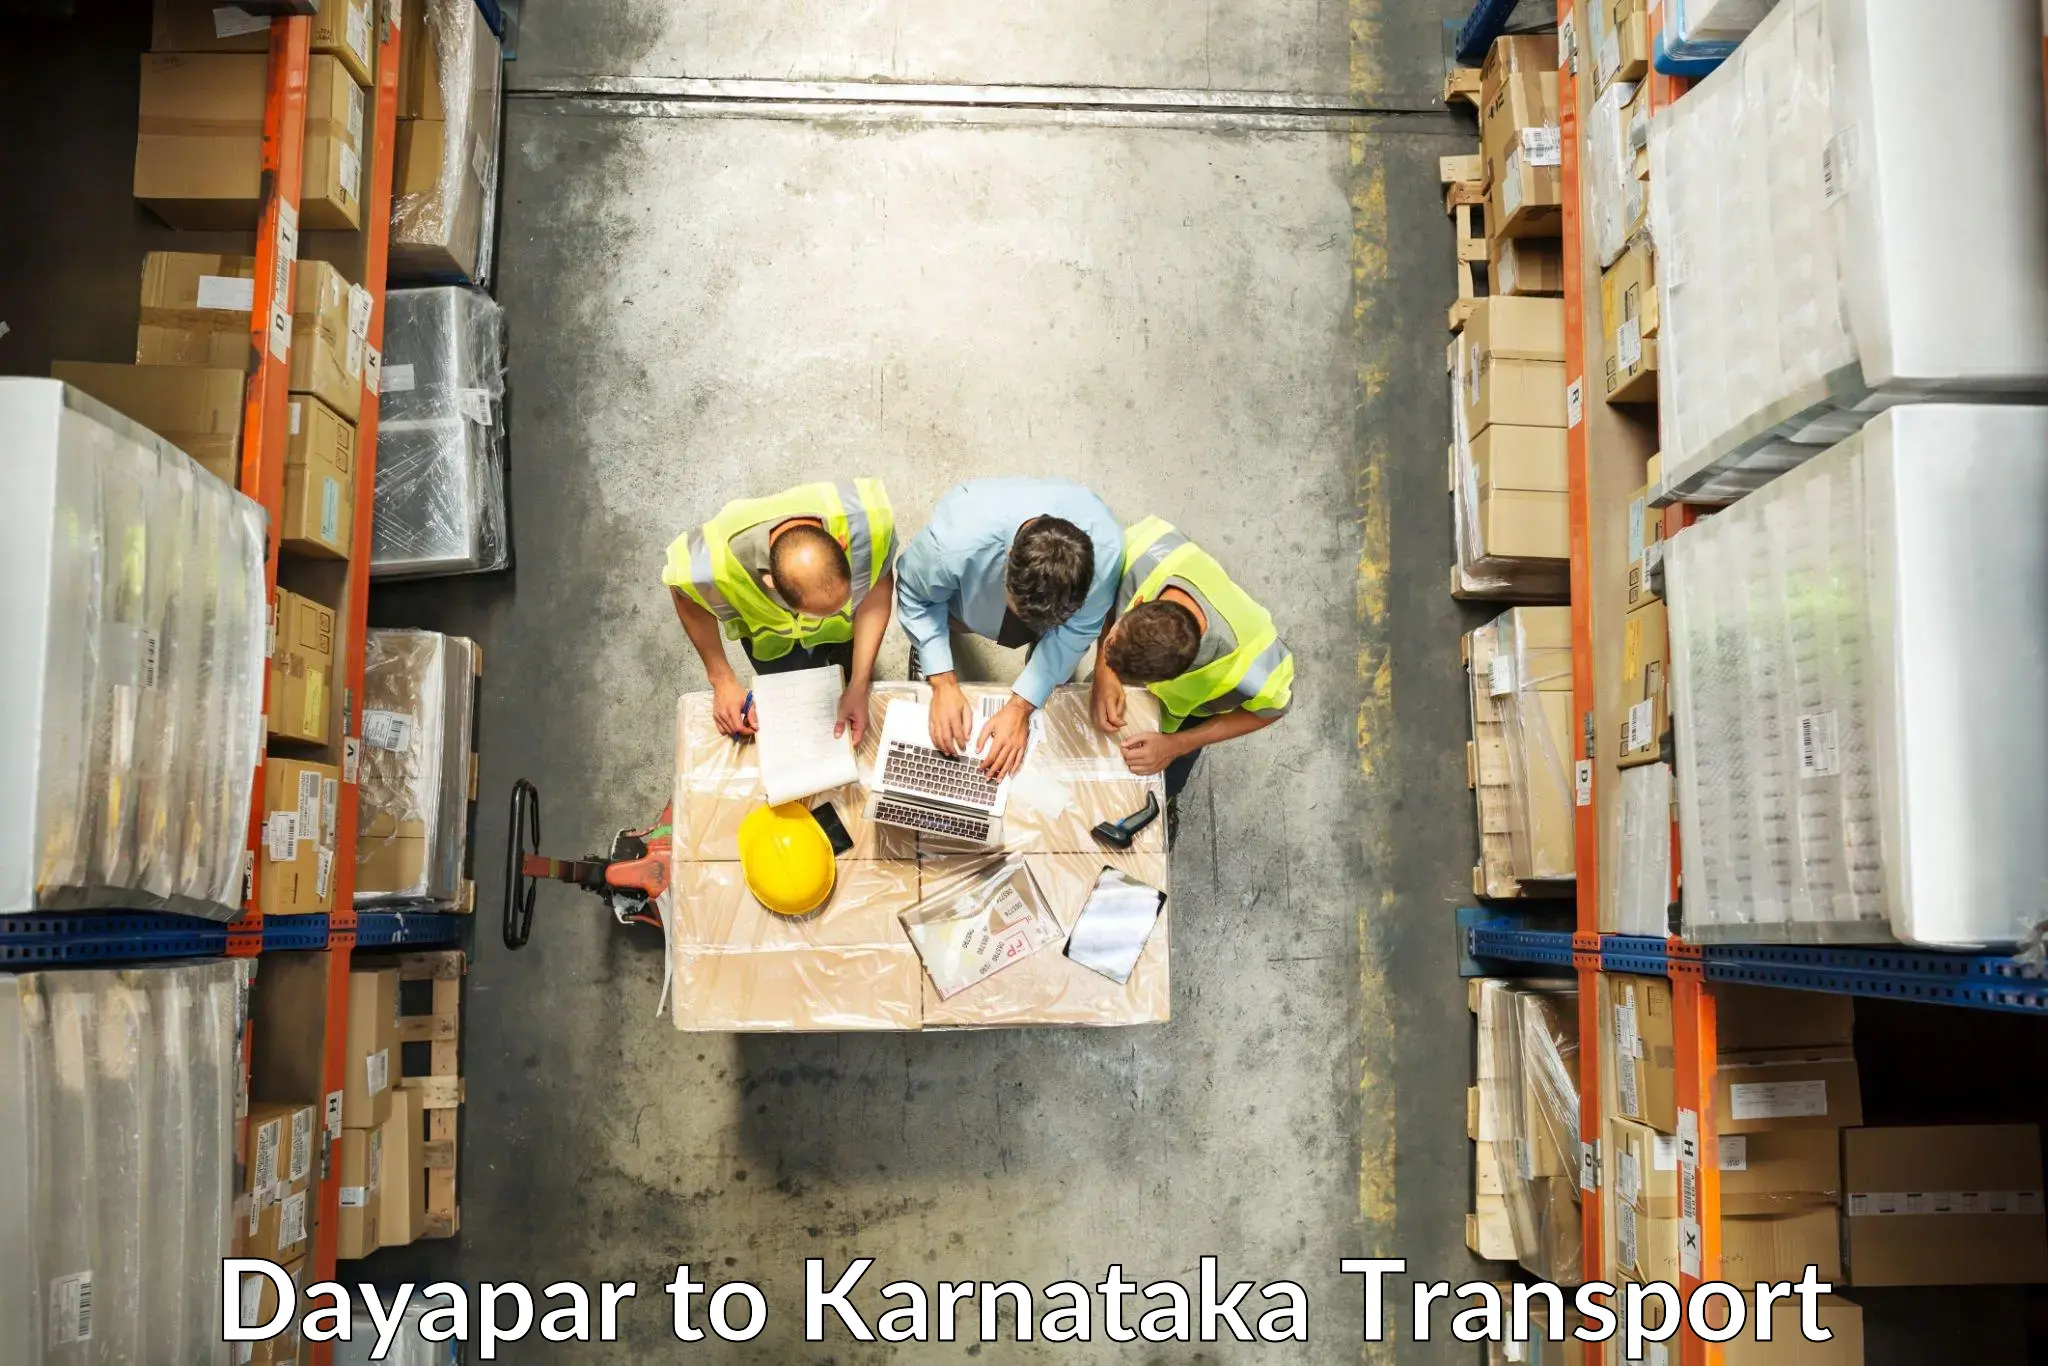 Part load transport service in India Dayapar to Hukkeri